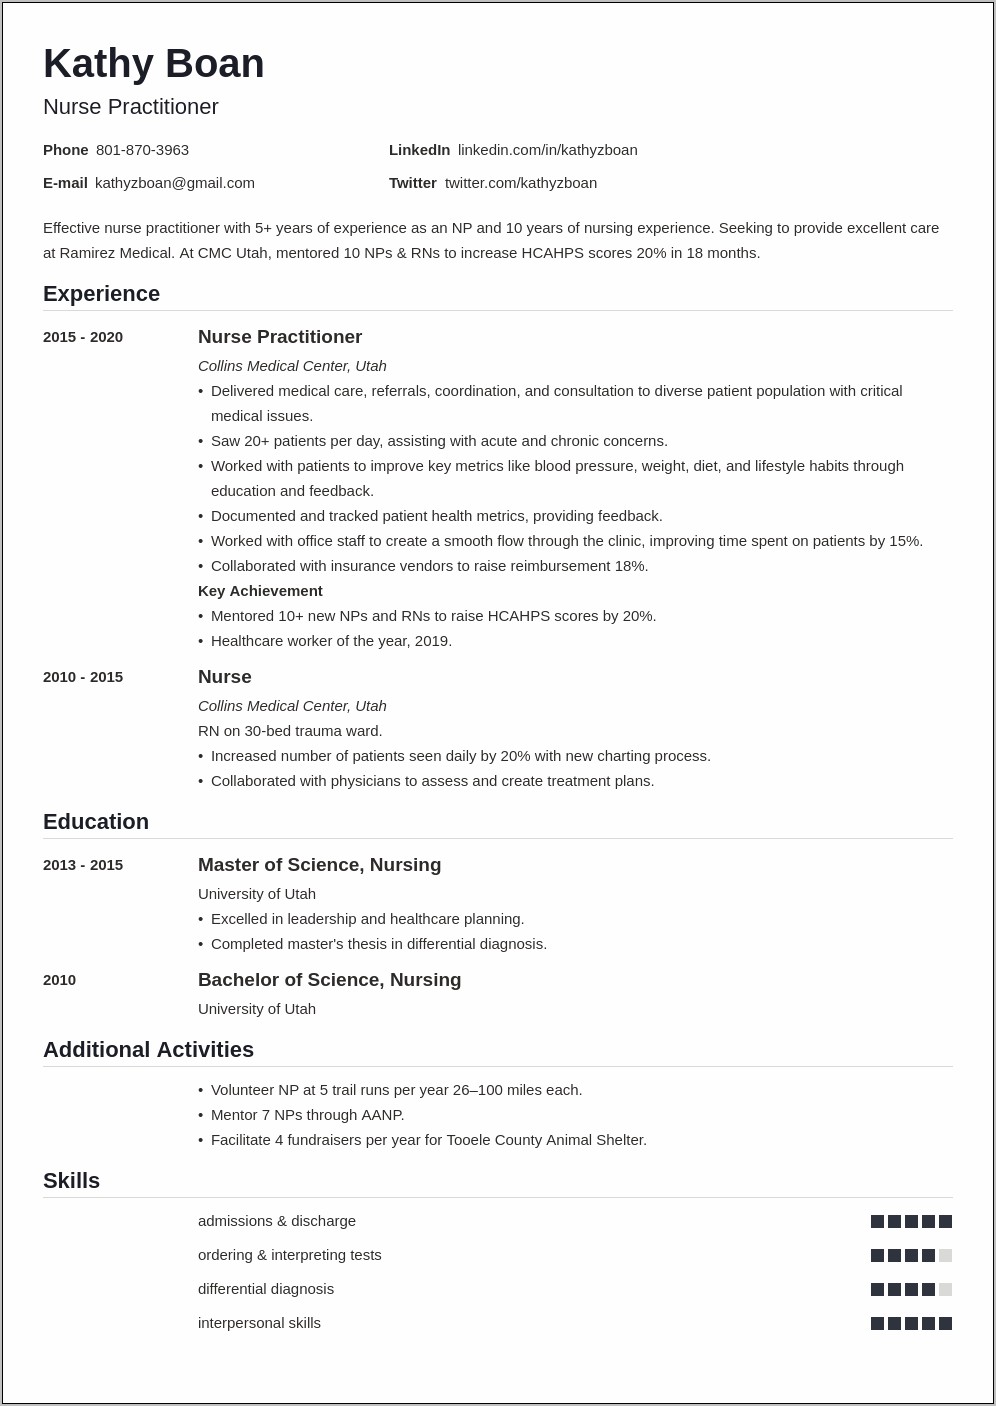 Example Of Resume Summary For New Graduate Nurse